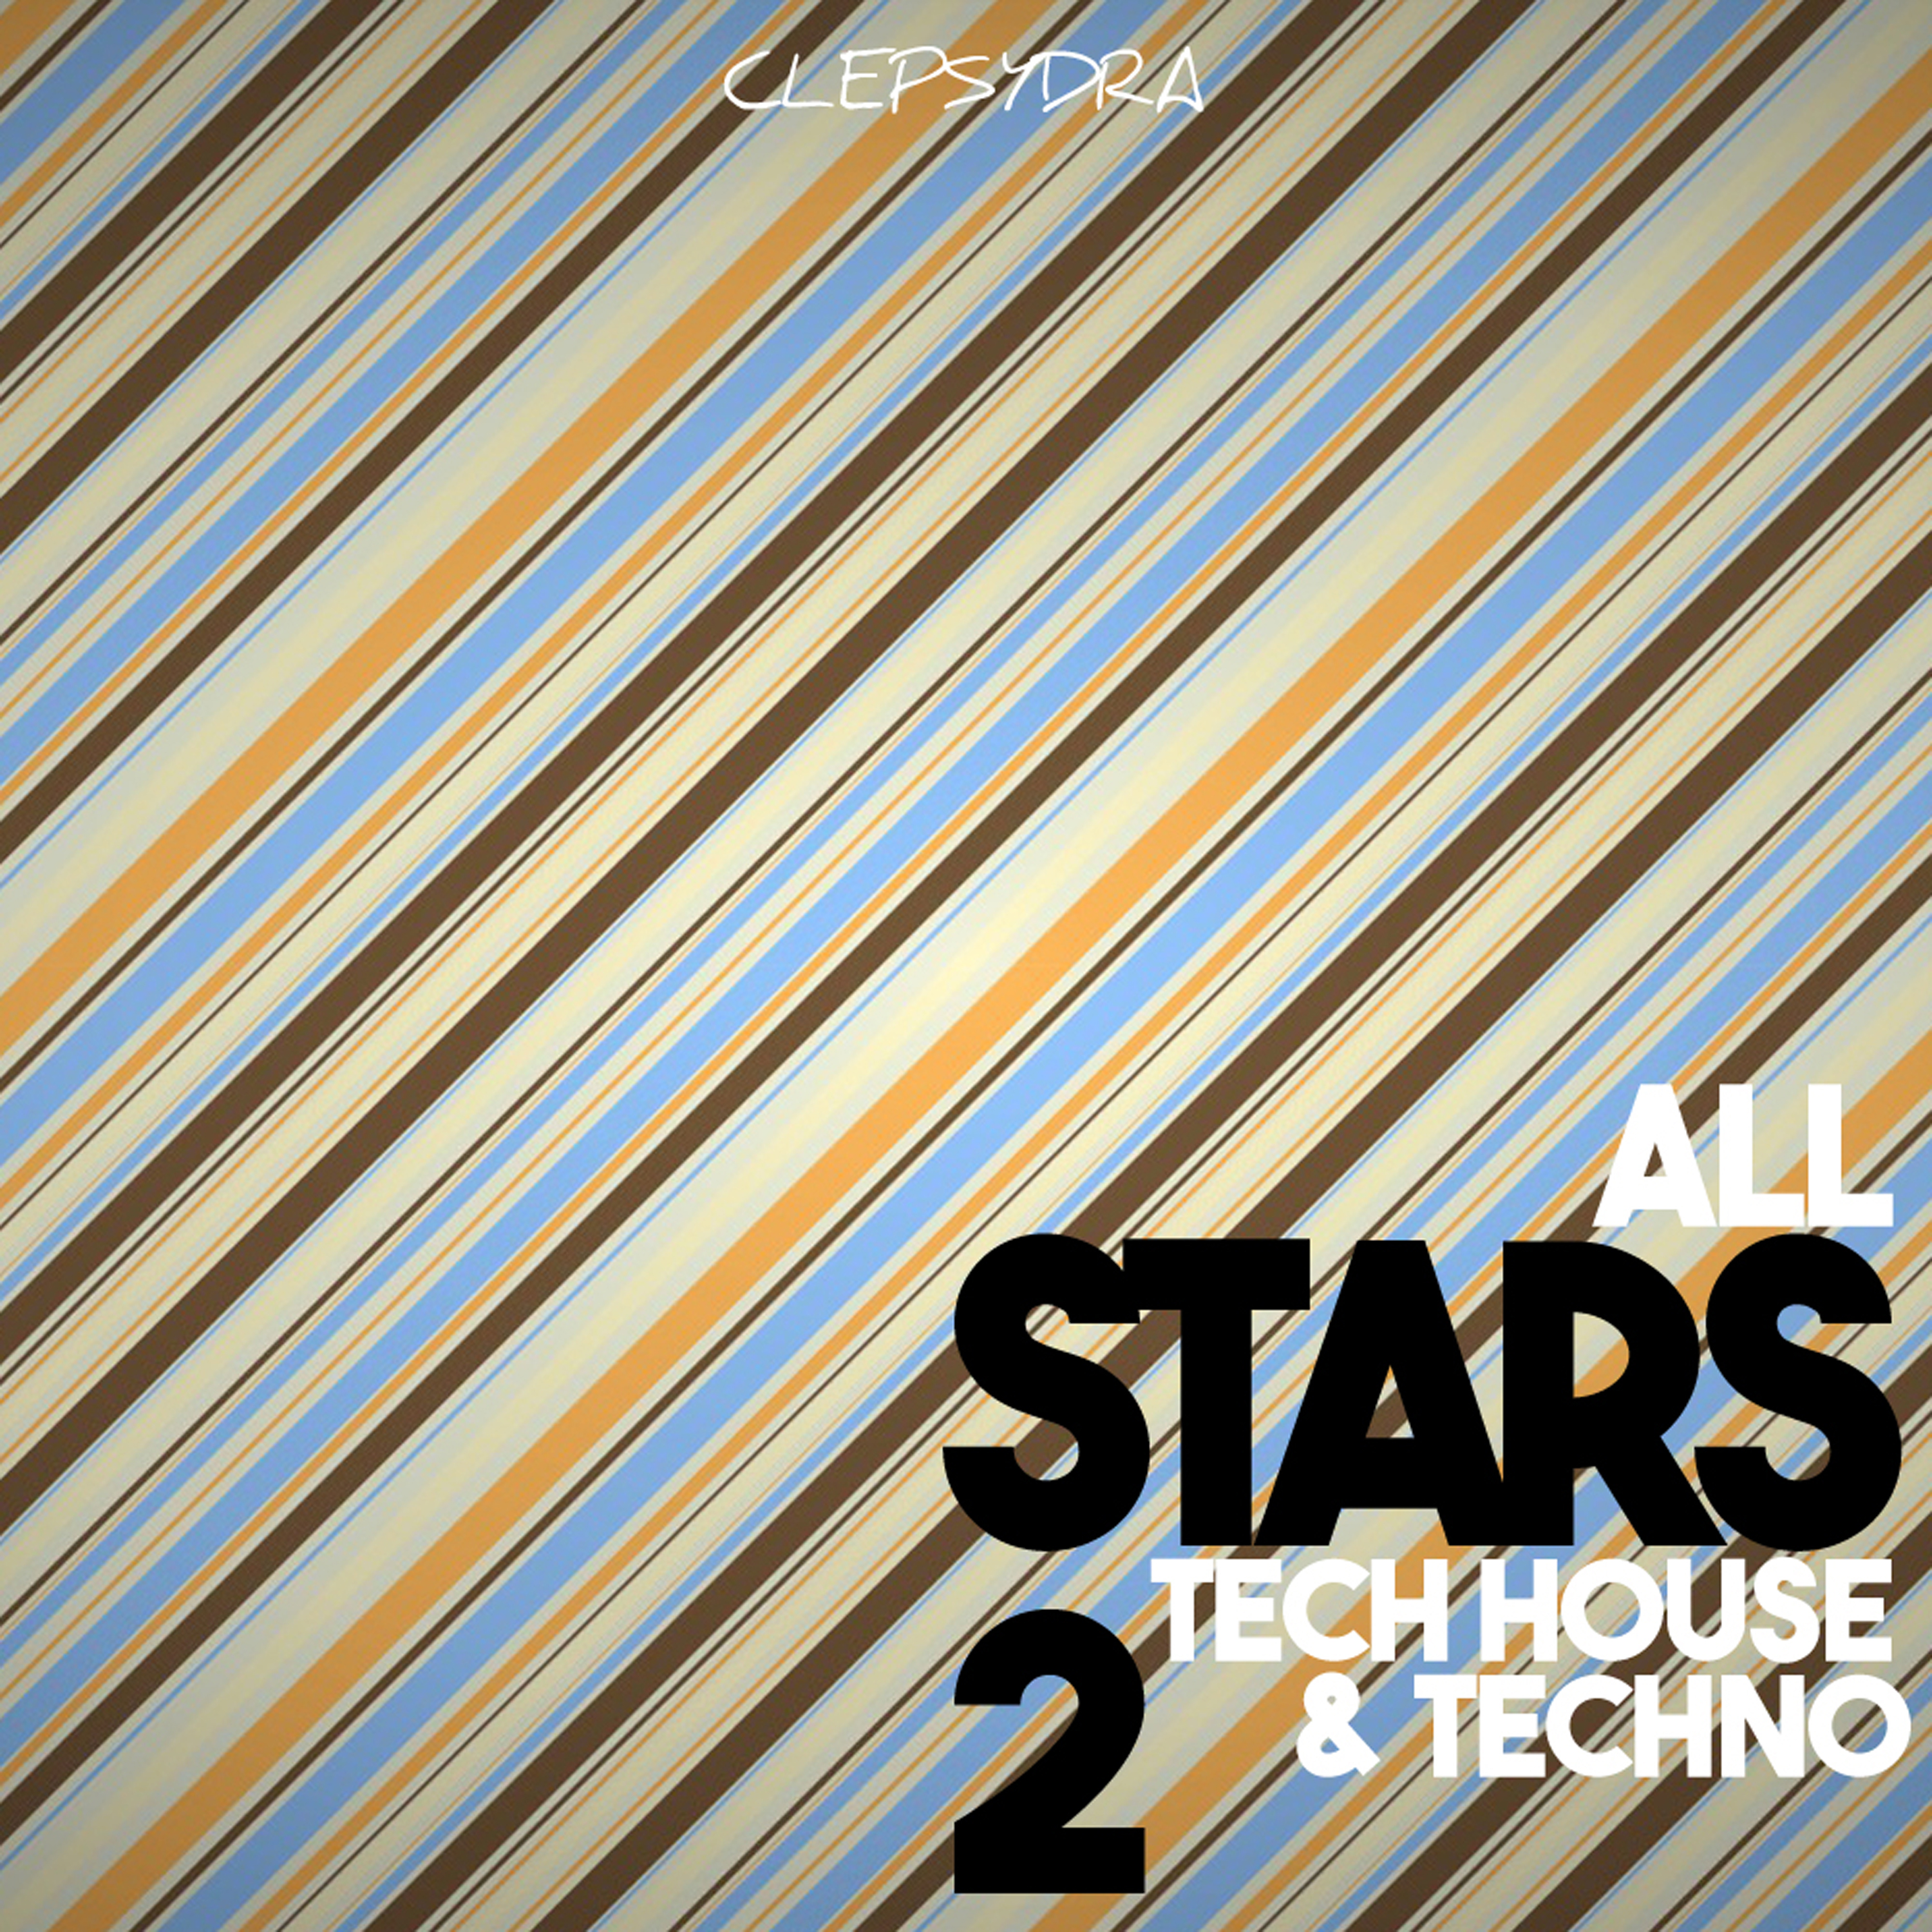 All Stars - Tech House & Techno 2